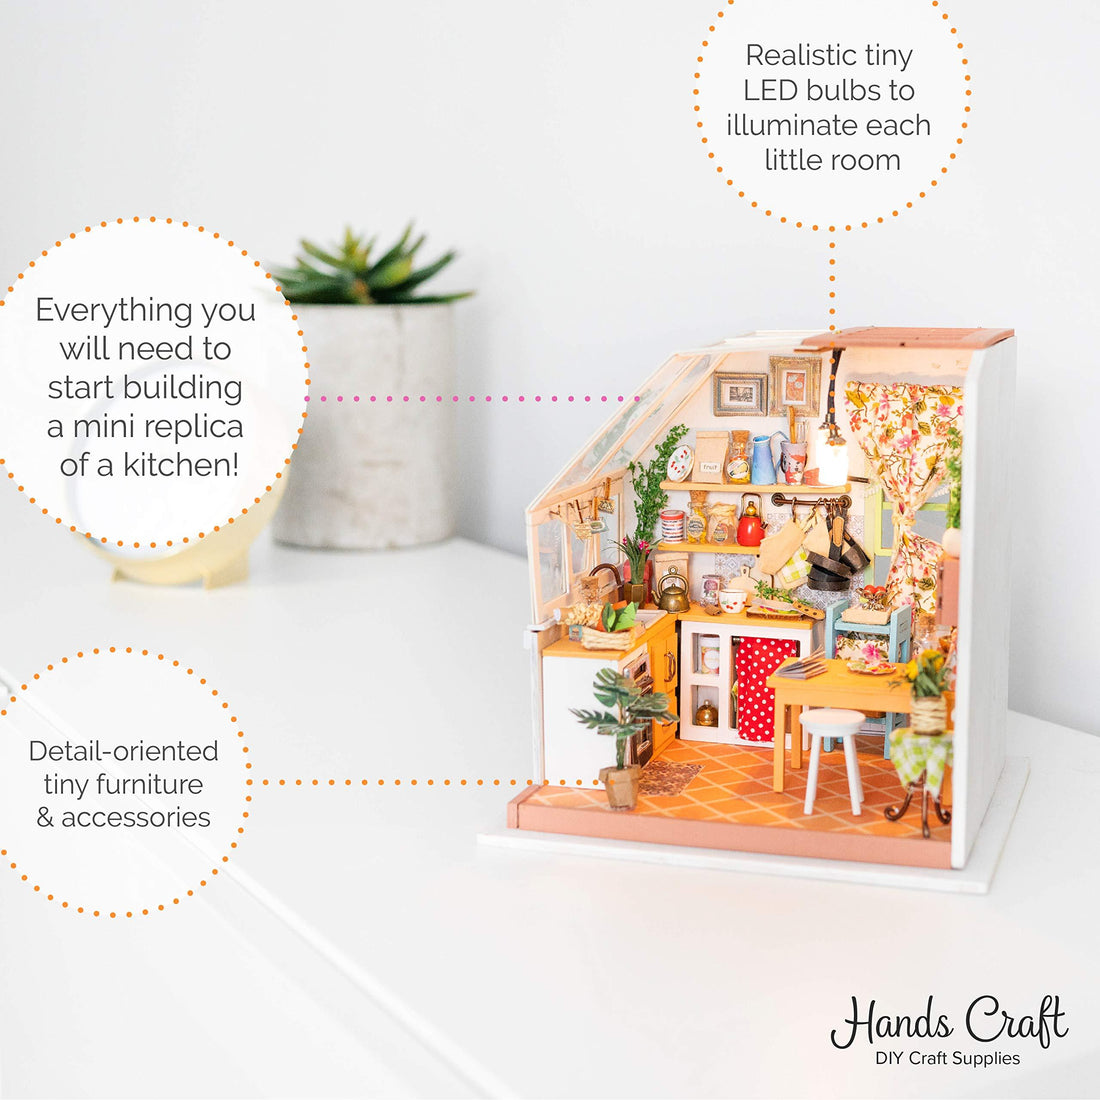 Jason's Kitchen Miniature Dollhouse - Kitty Hawk Kites Online Store